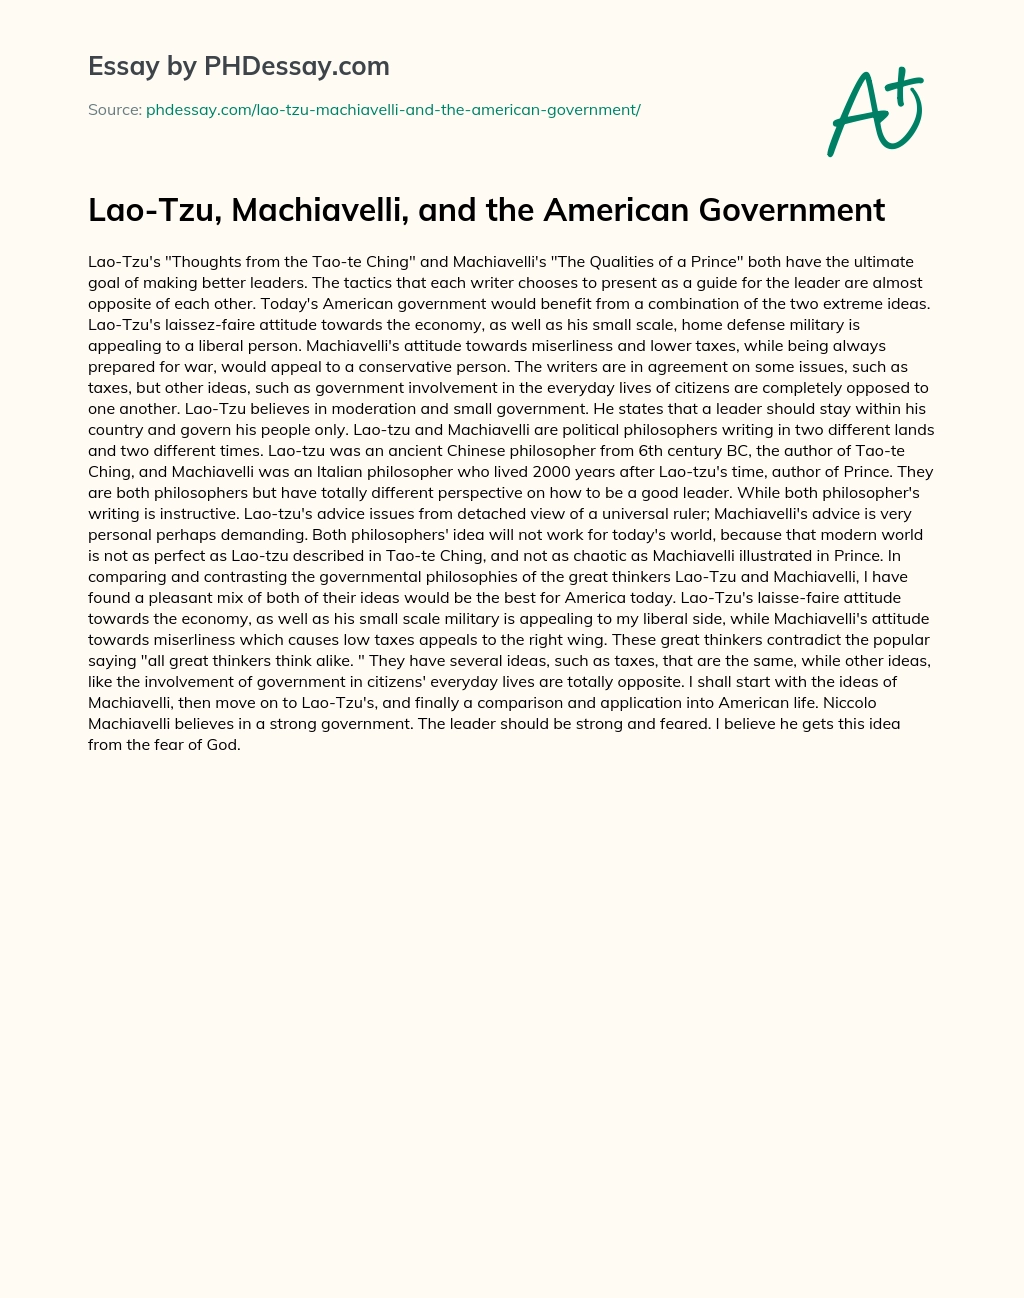 Lao-Tzu, Machiavelli, and the American Government essay